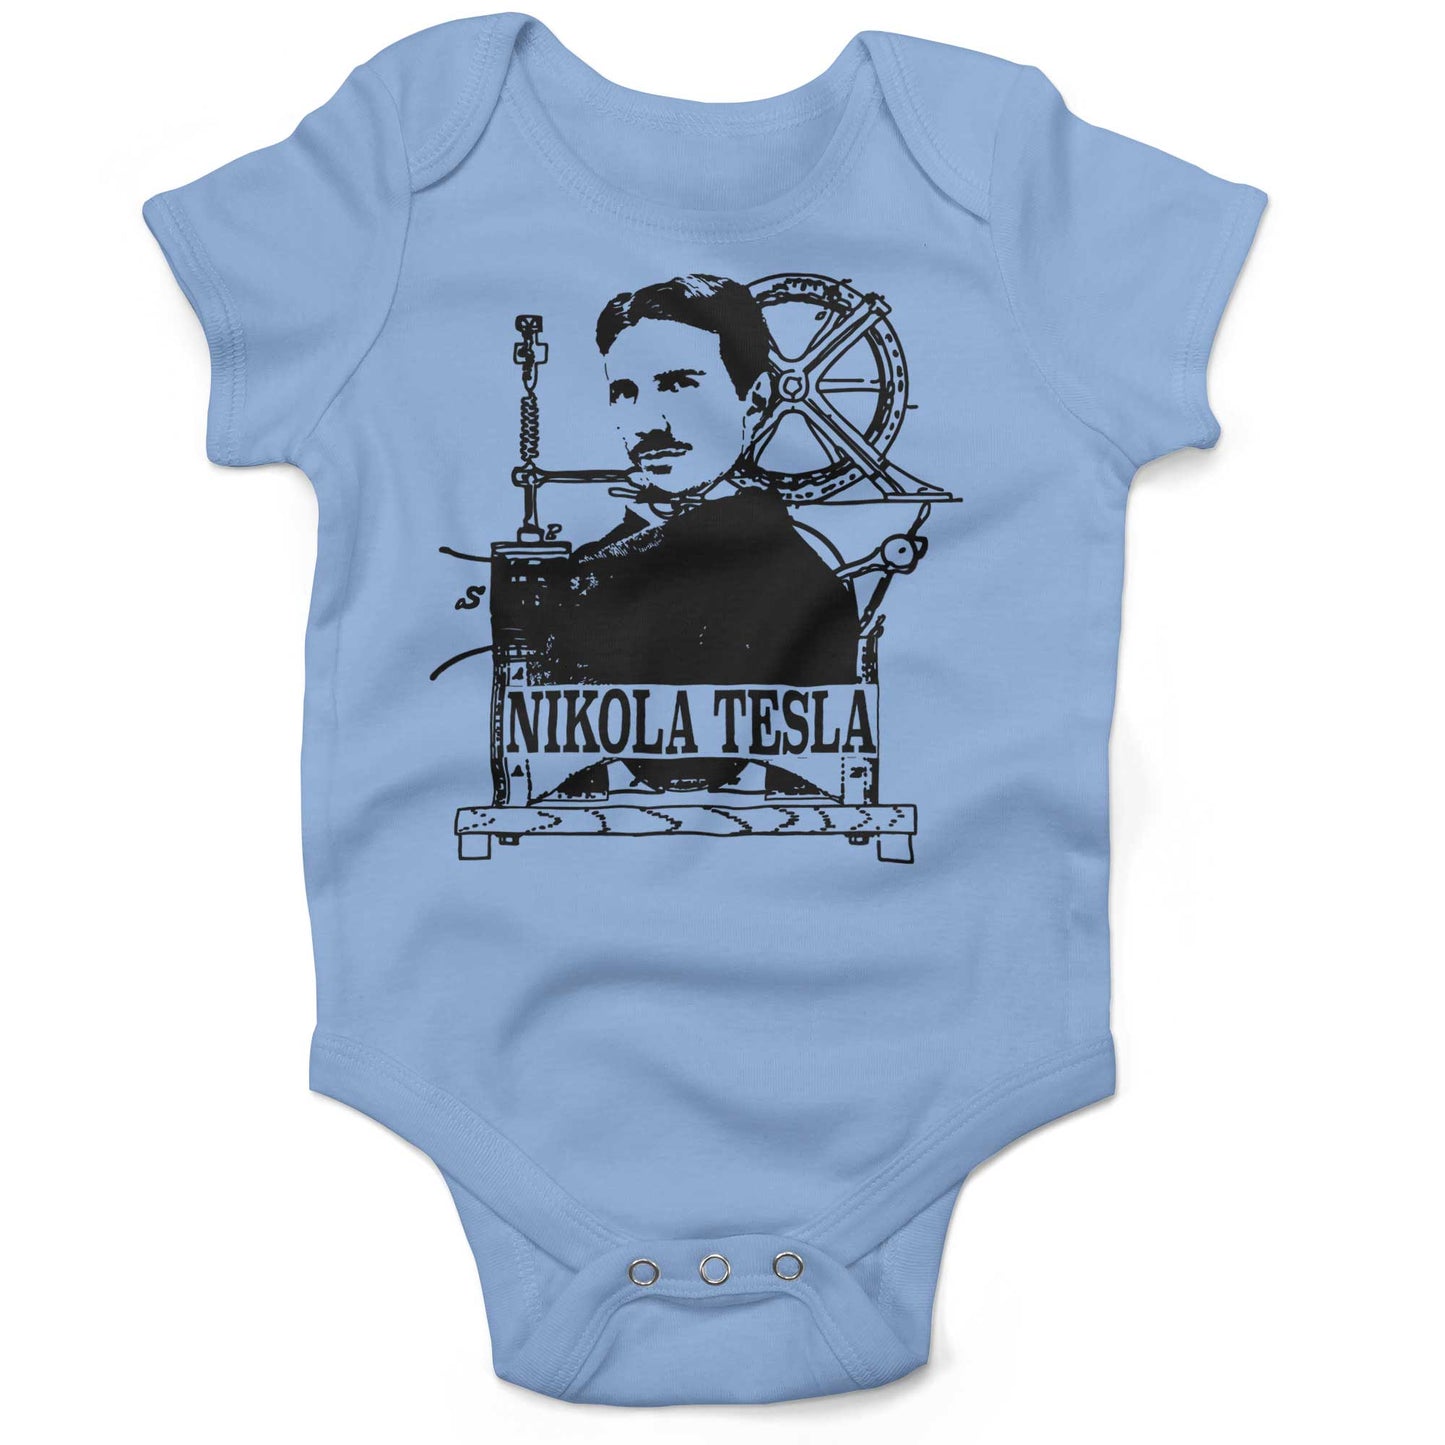 Nikola Tesla Infant Bodysuit-Organic Baby Blue-3-6 months